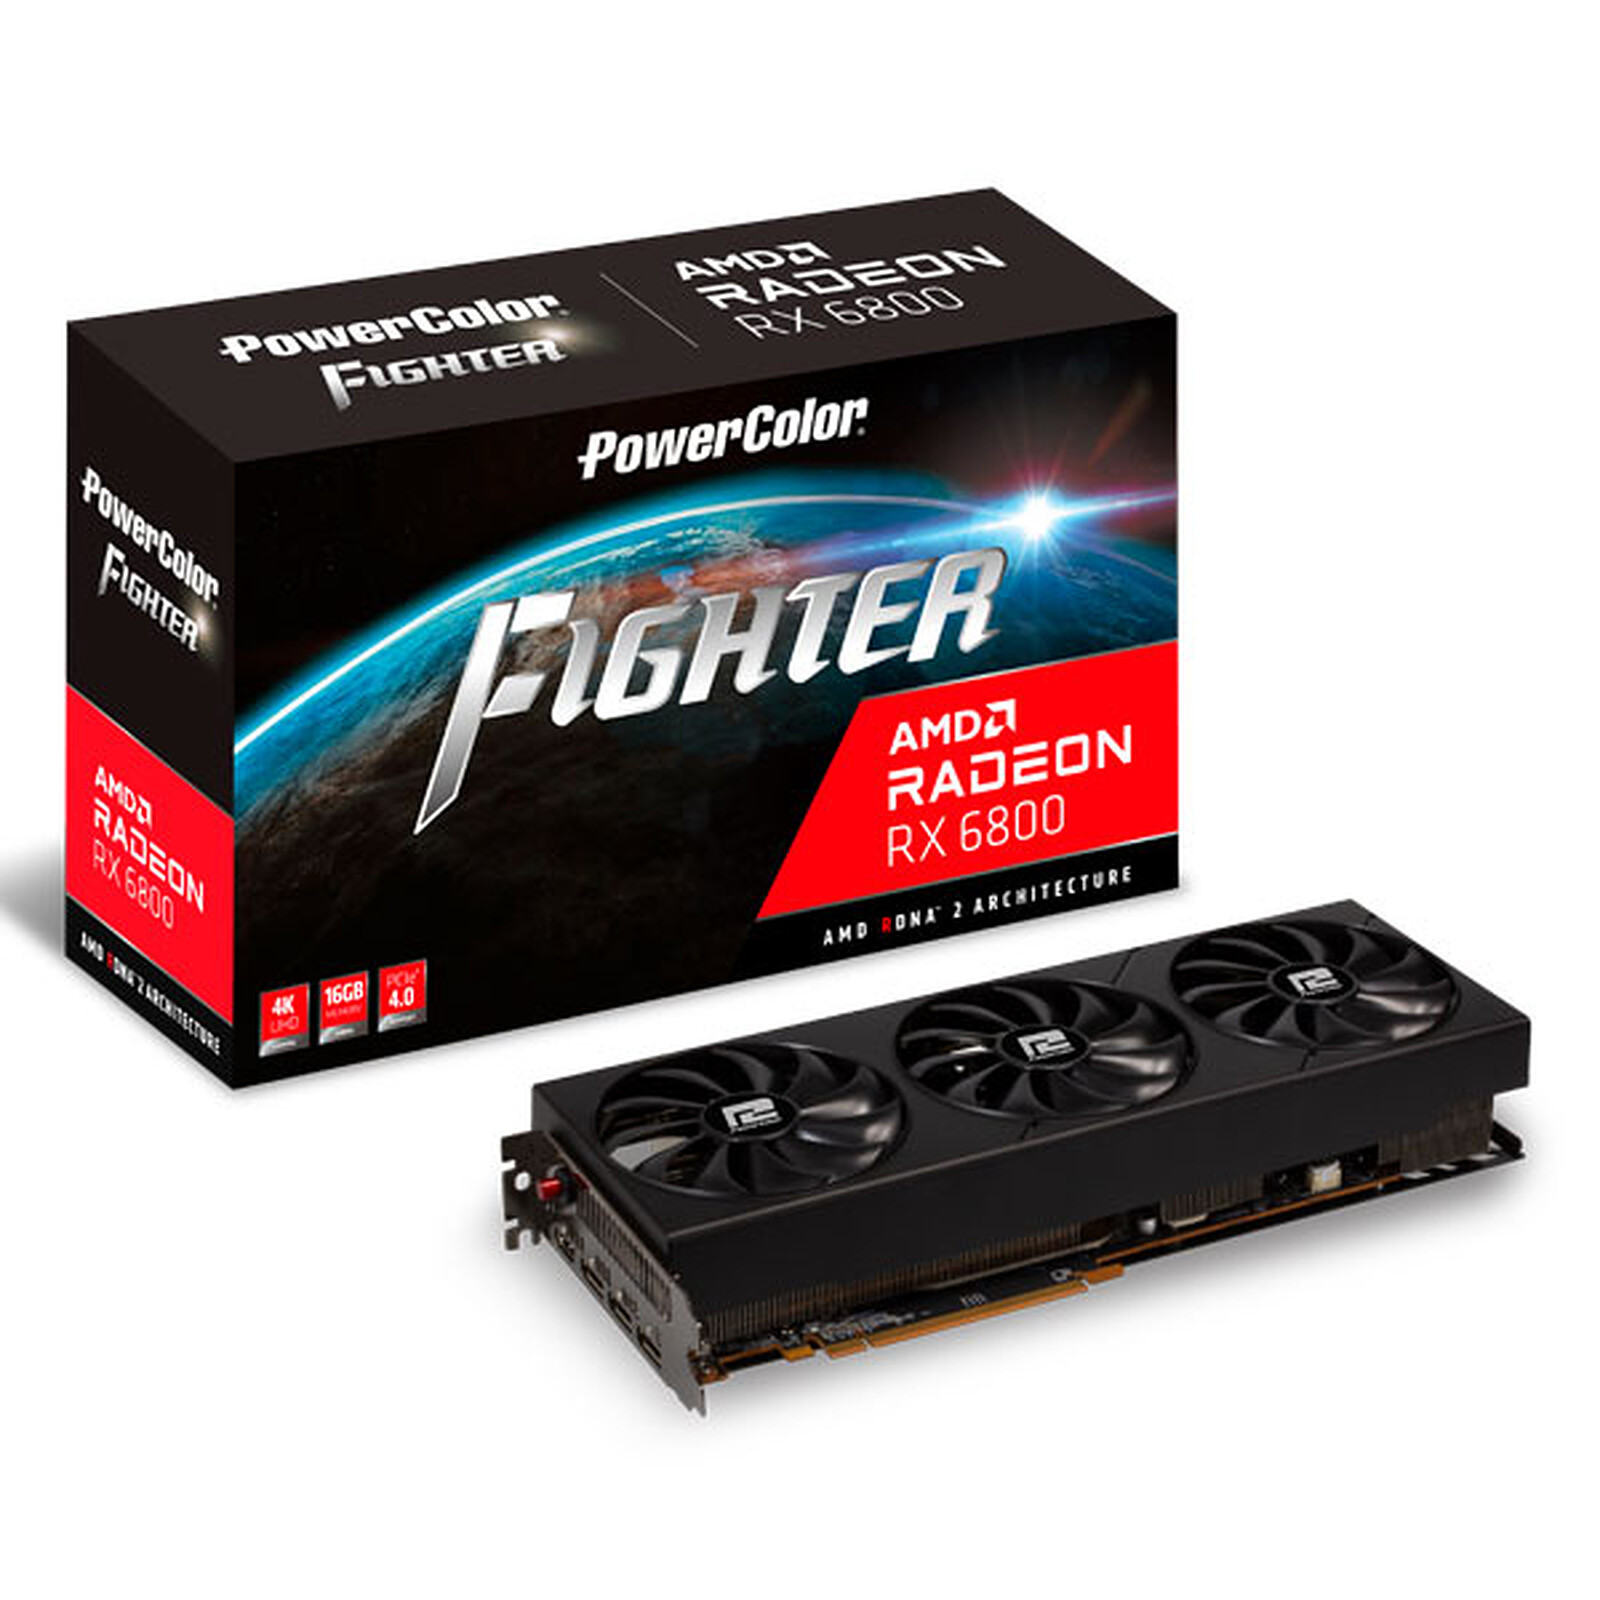 PowerColor Fighter AMD Radeon RX 6800 16GB GDDR6 - Graphics card 